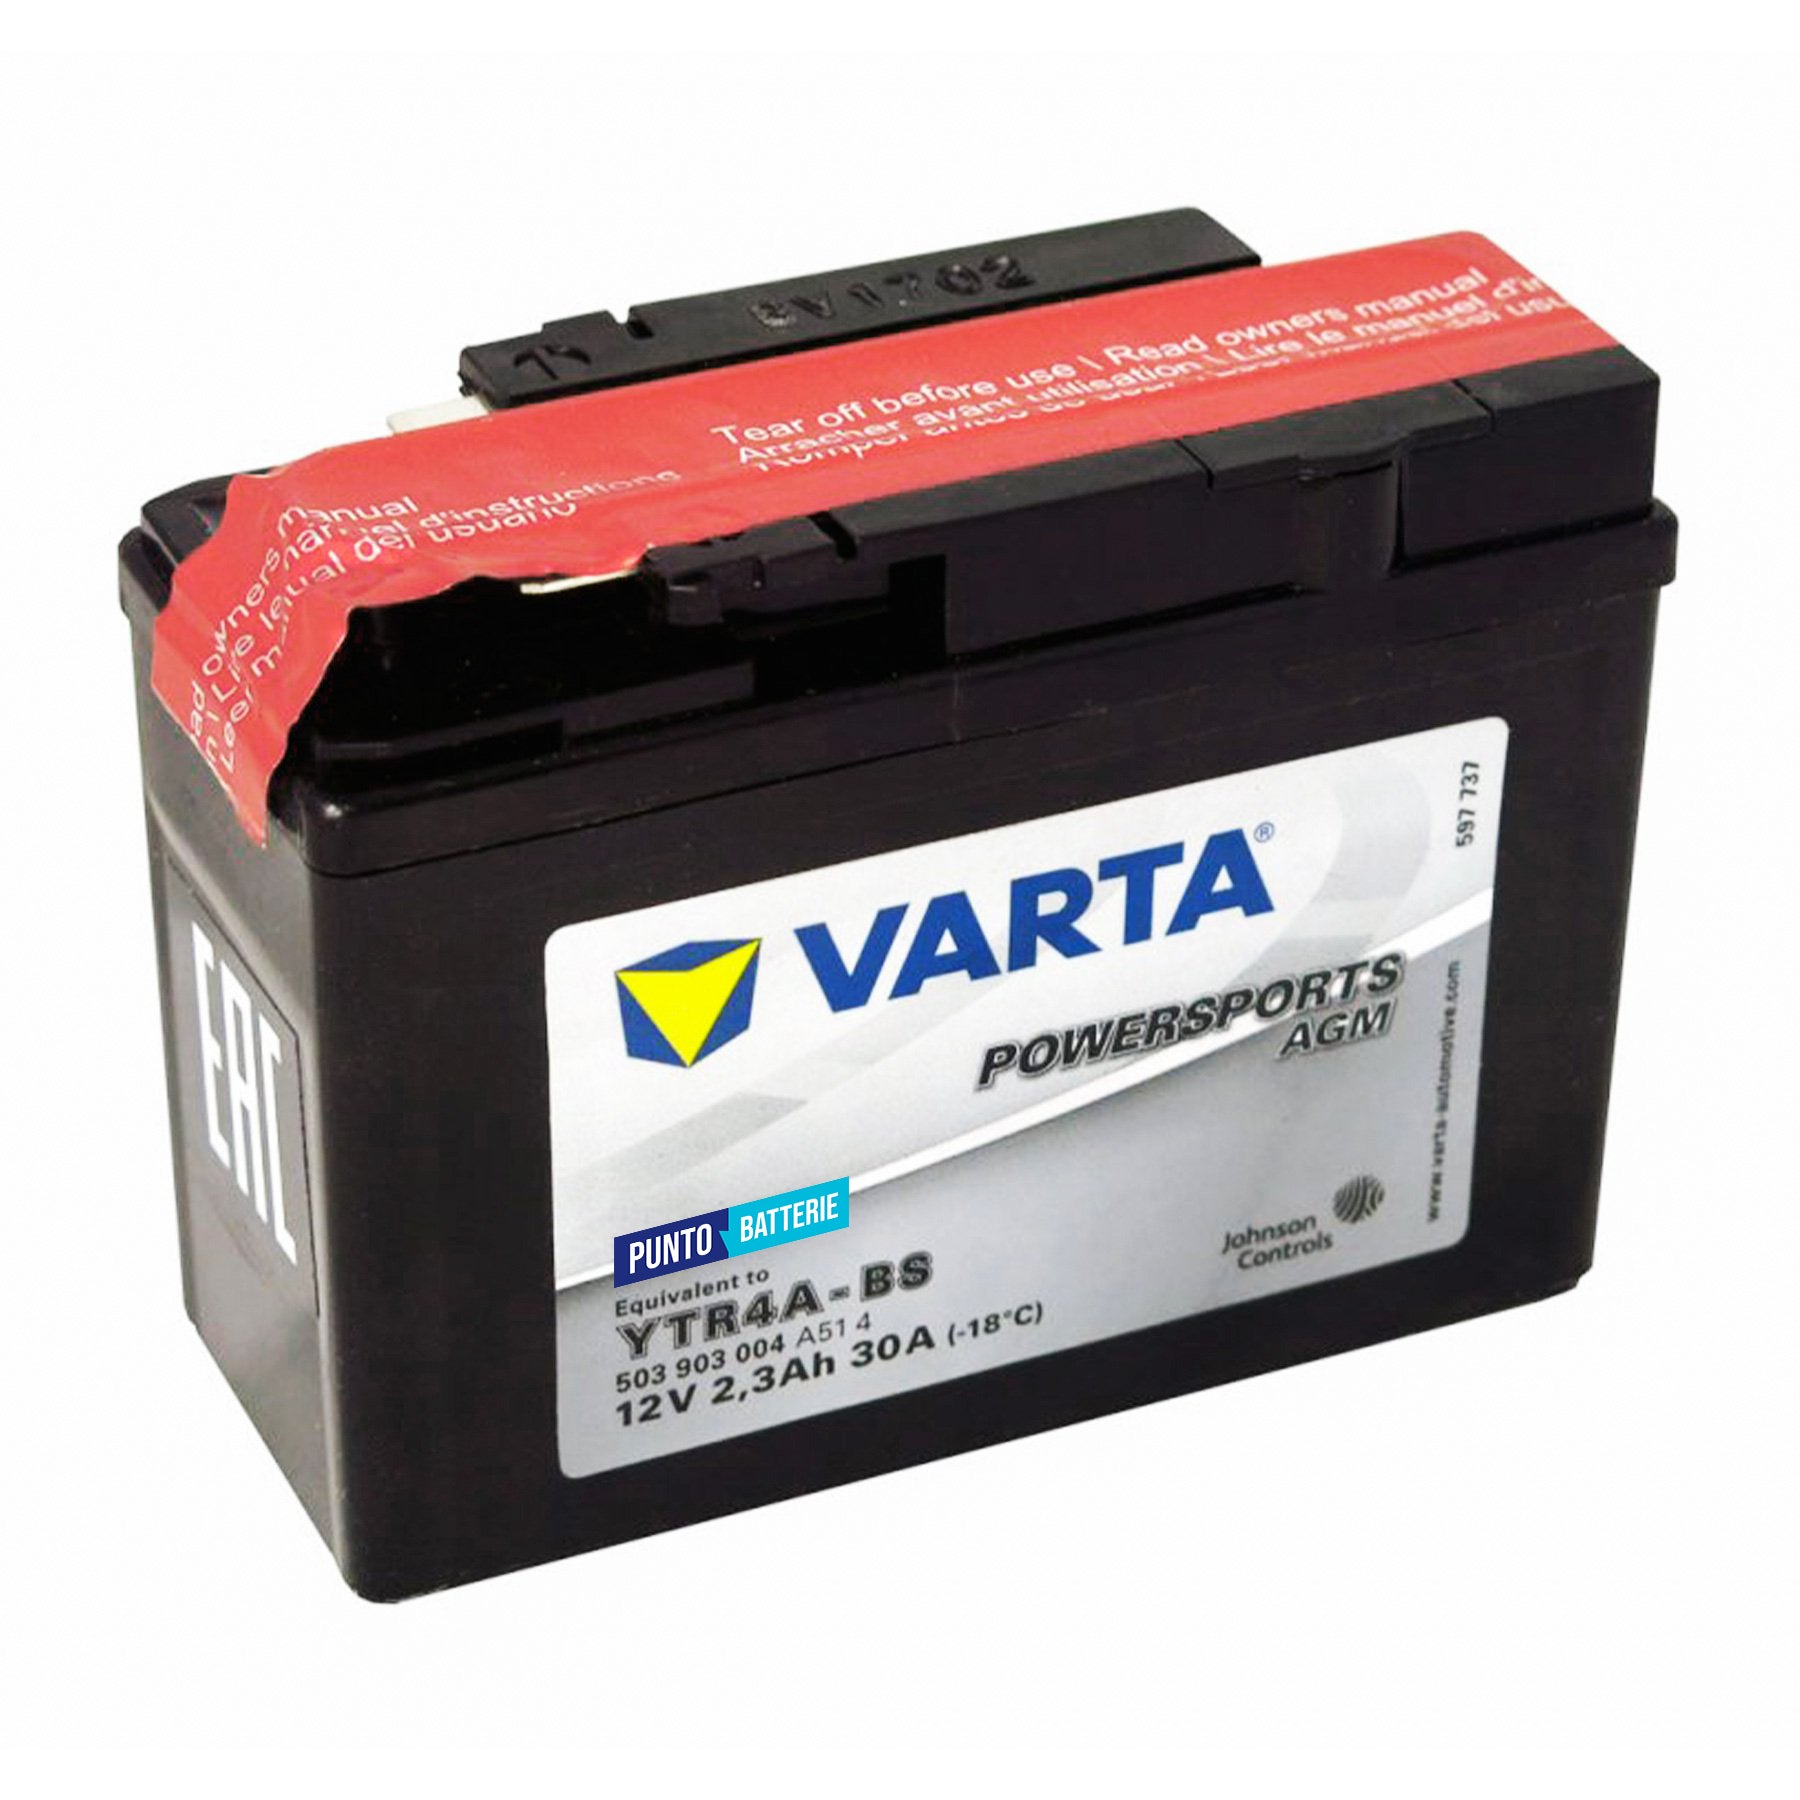 Batteria originale Varta Powersport AGM YTR4A-BS, dimensioni 114 x 49 x 86, polo positivo a destra, 12 volt, 2 amperora, 30 ampere. Batteria per moto, scooter e powersport.